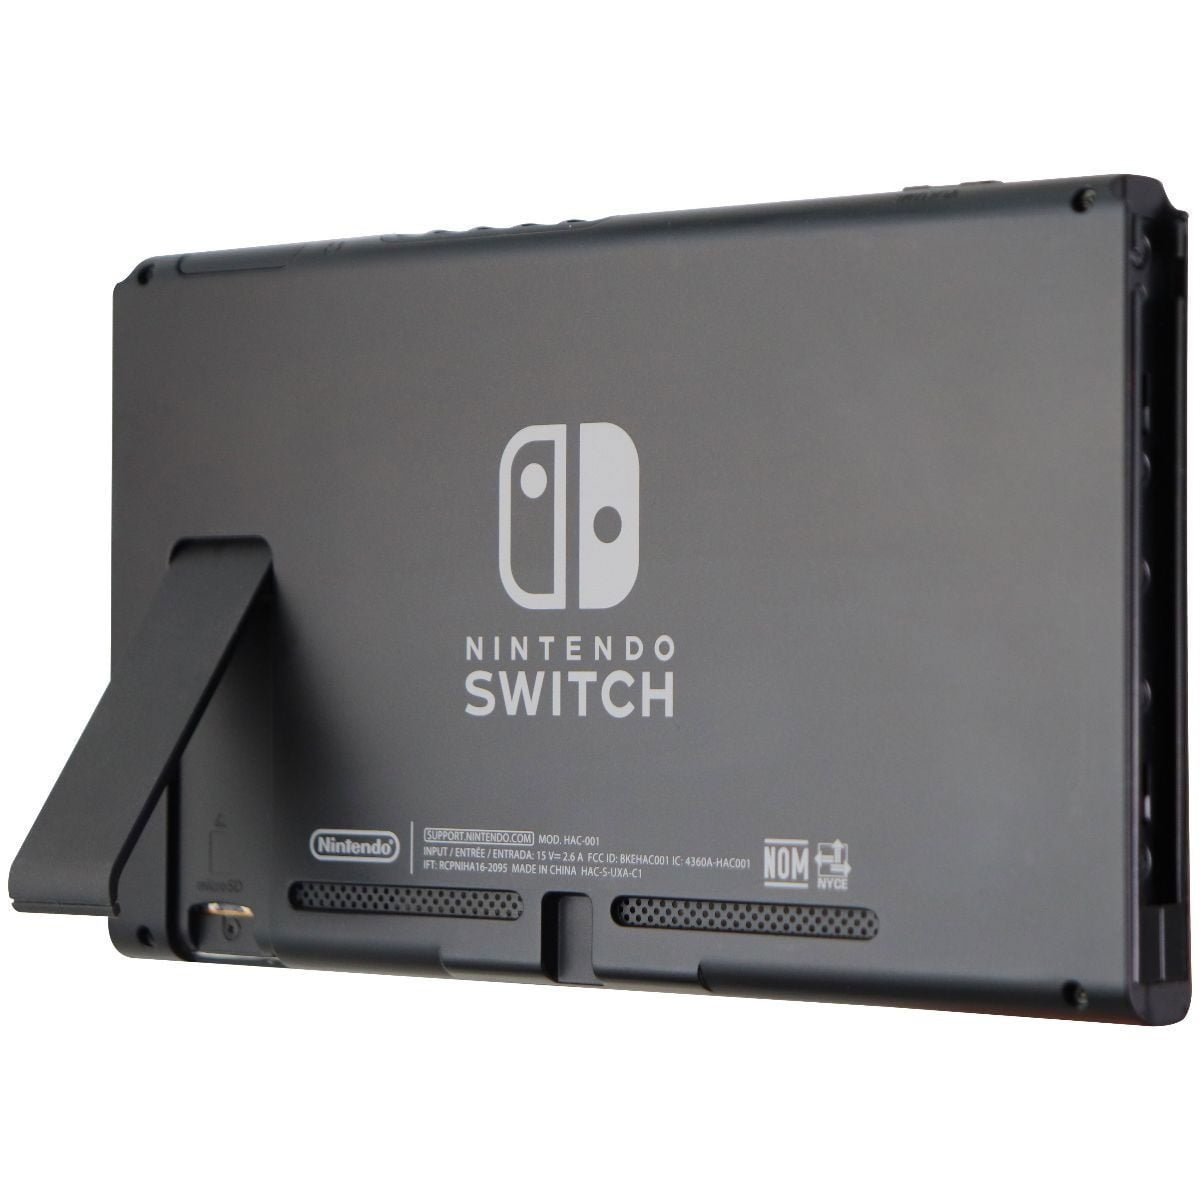 Restored Nintendo Switch 32GB Hand-Held Gaming Console - Black 